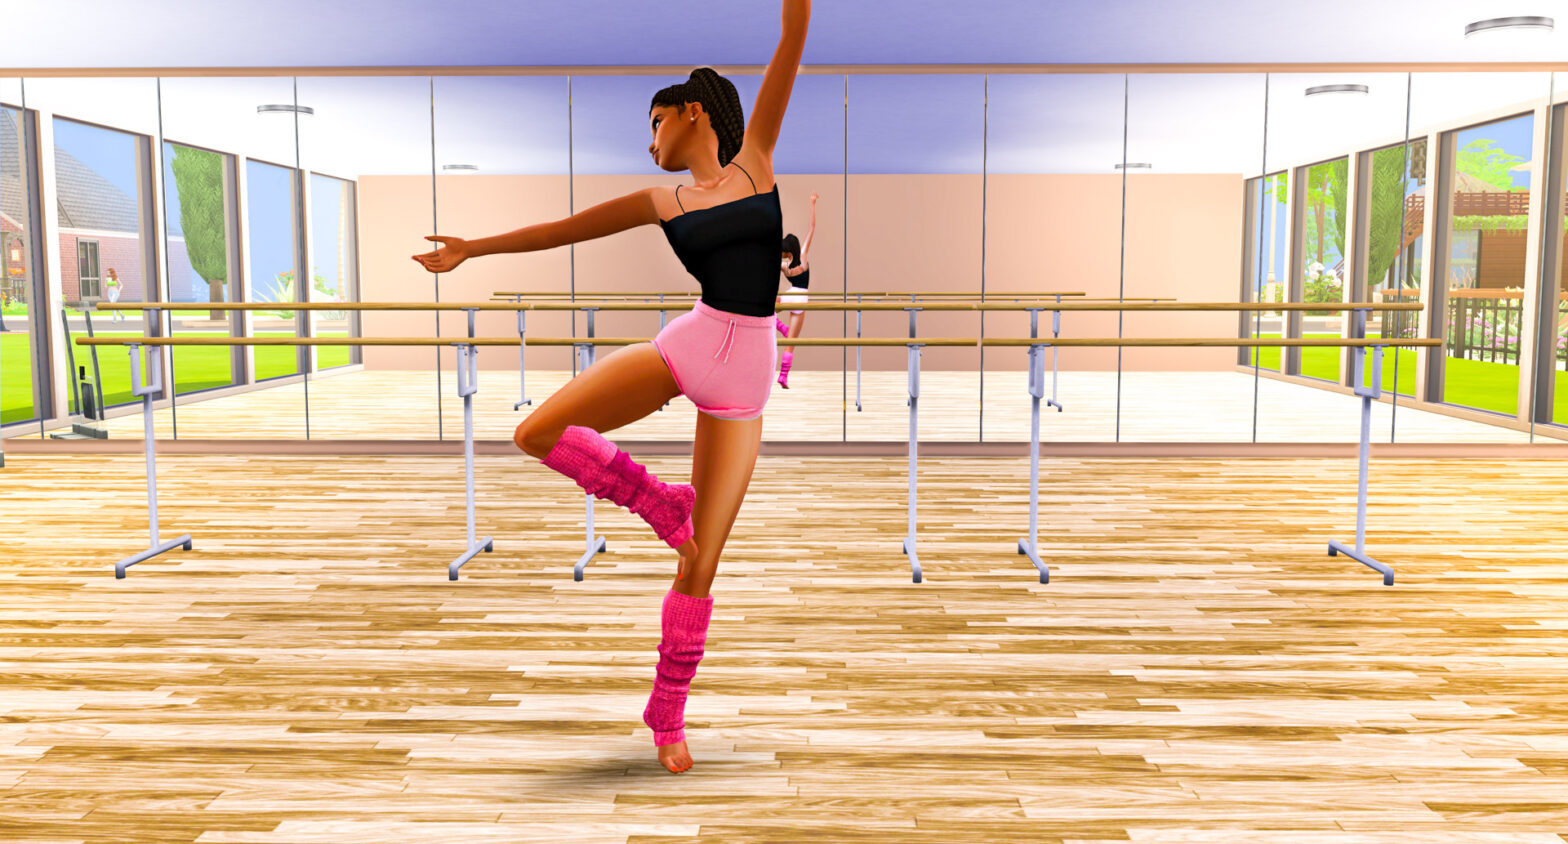 sims 4 dance animations mod